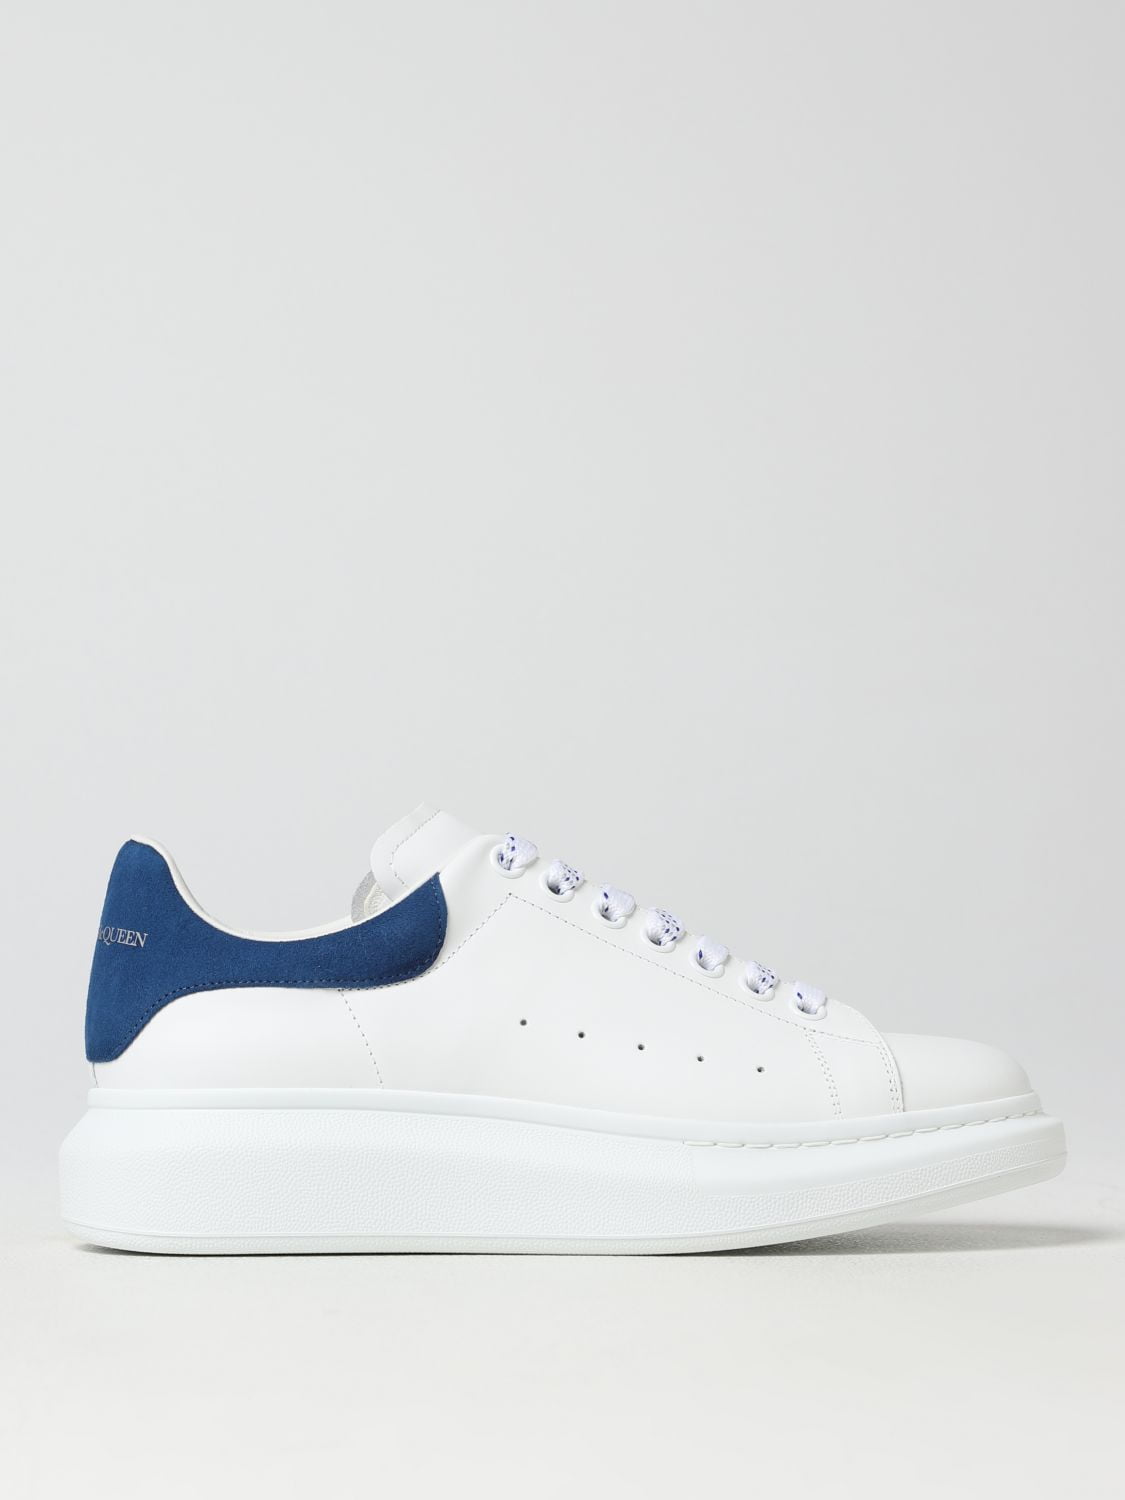 Blue Alexander McQueen Sneakers for Women | Lyst